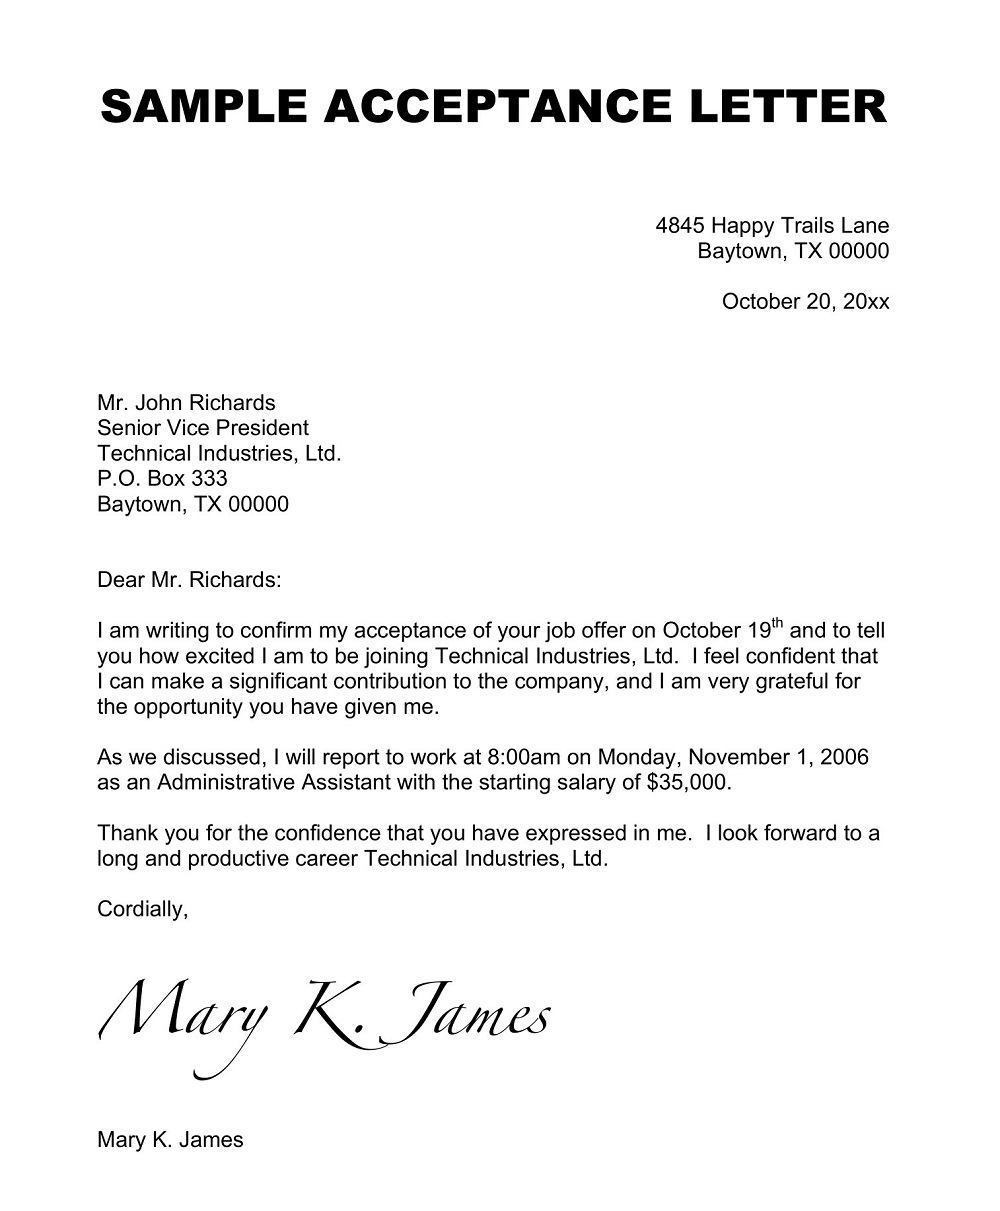 Follow-Up Job Acceptance Letter Template